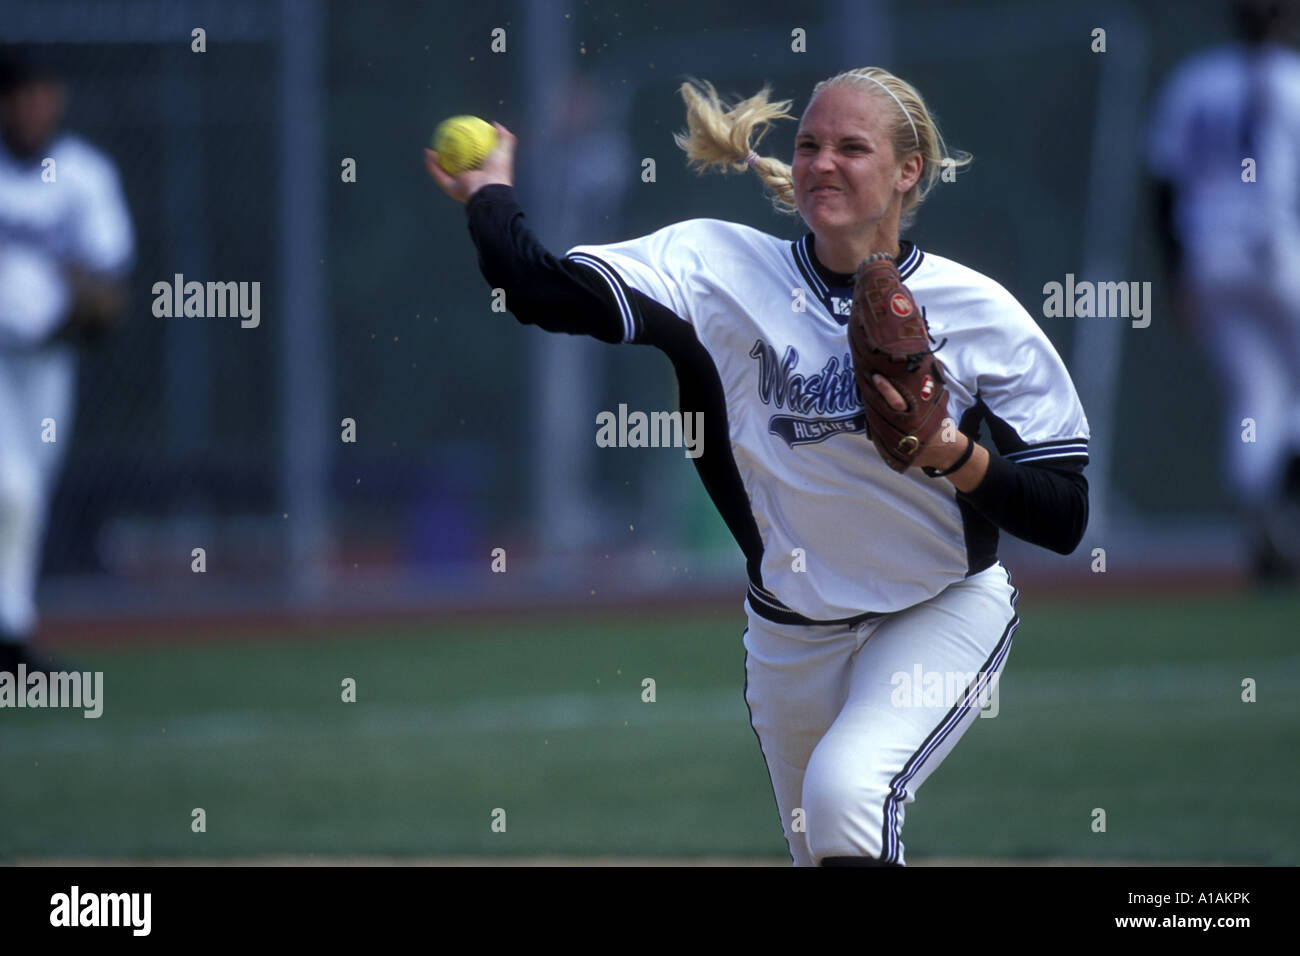 USA Washington Seattle UW softball infielder throws ball during college game at Husky Field Stock Photo